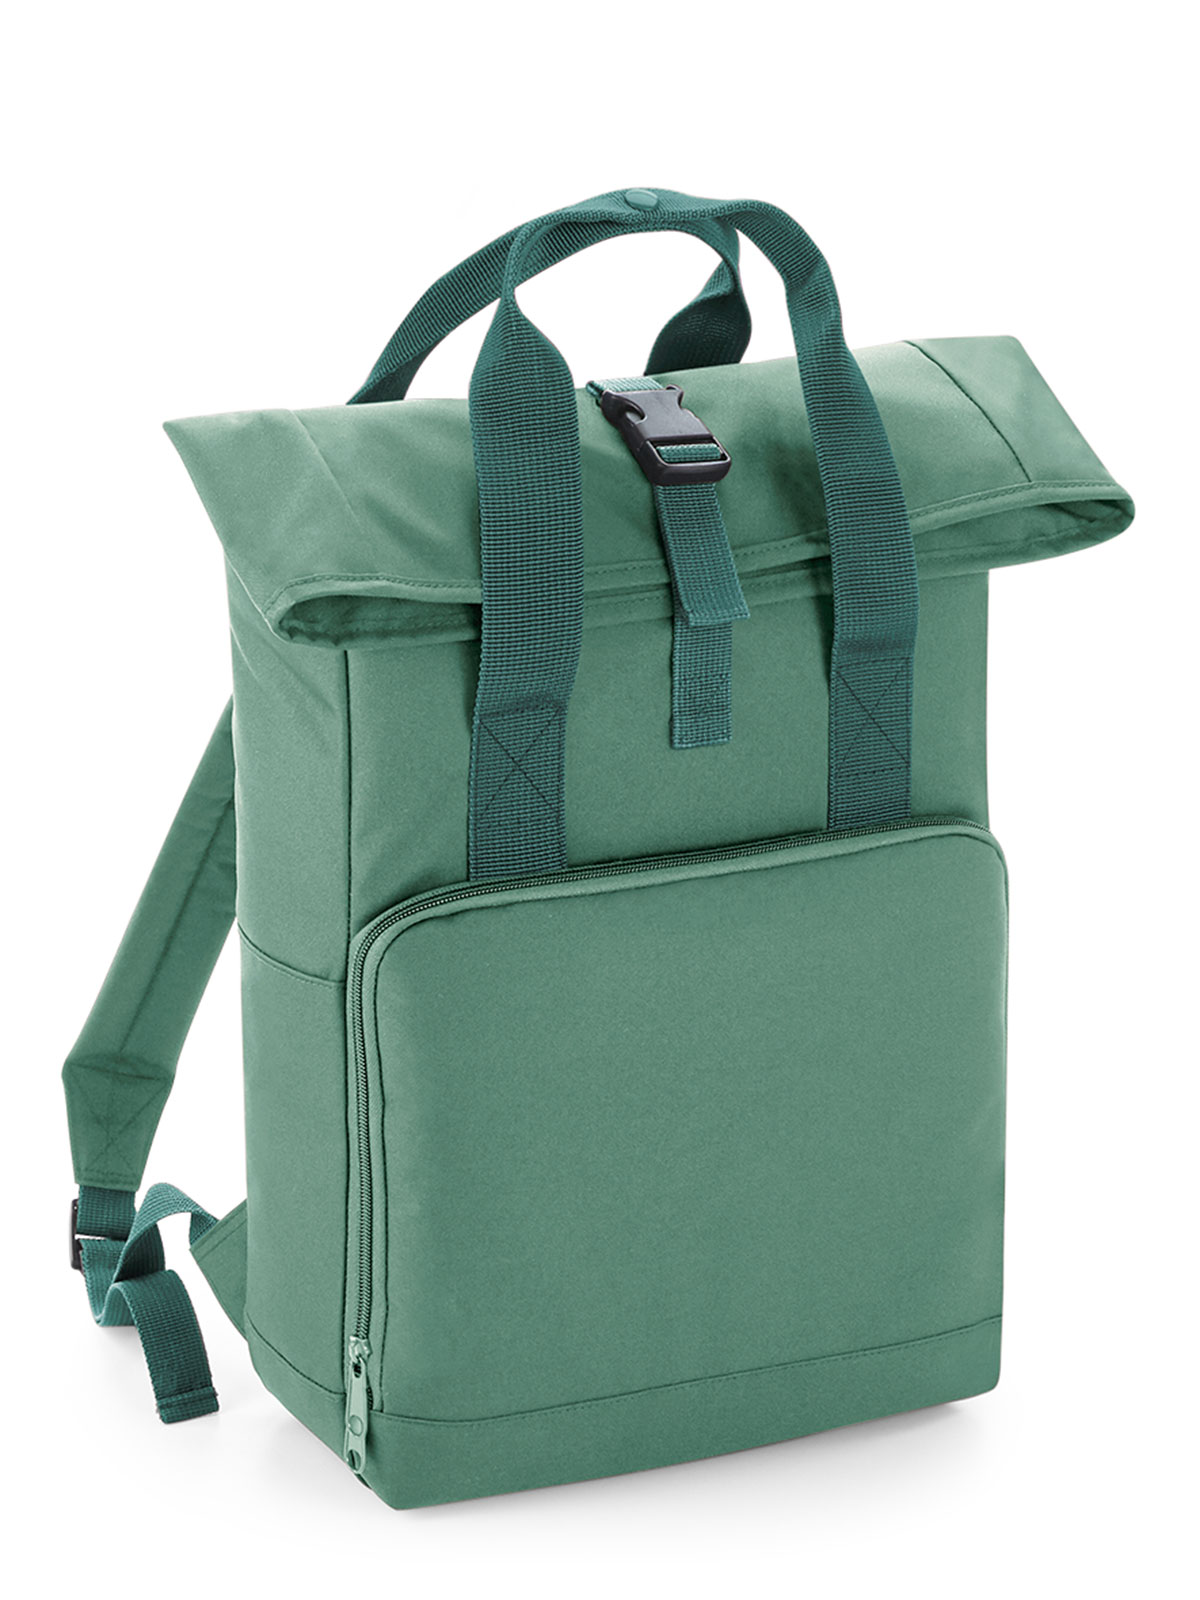 twin-handle-roll-top-backpack-sage-green.webp